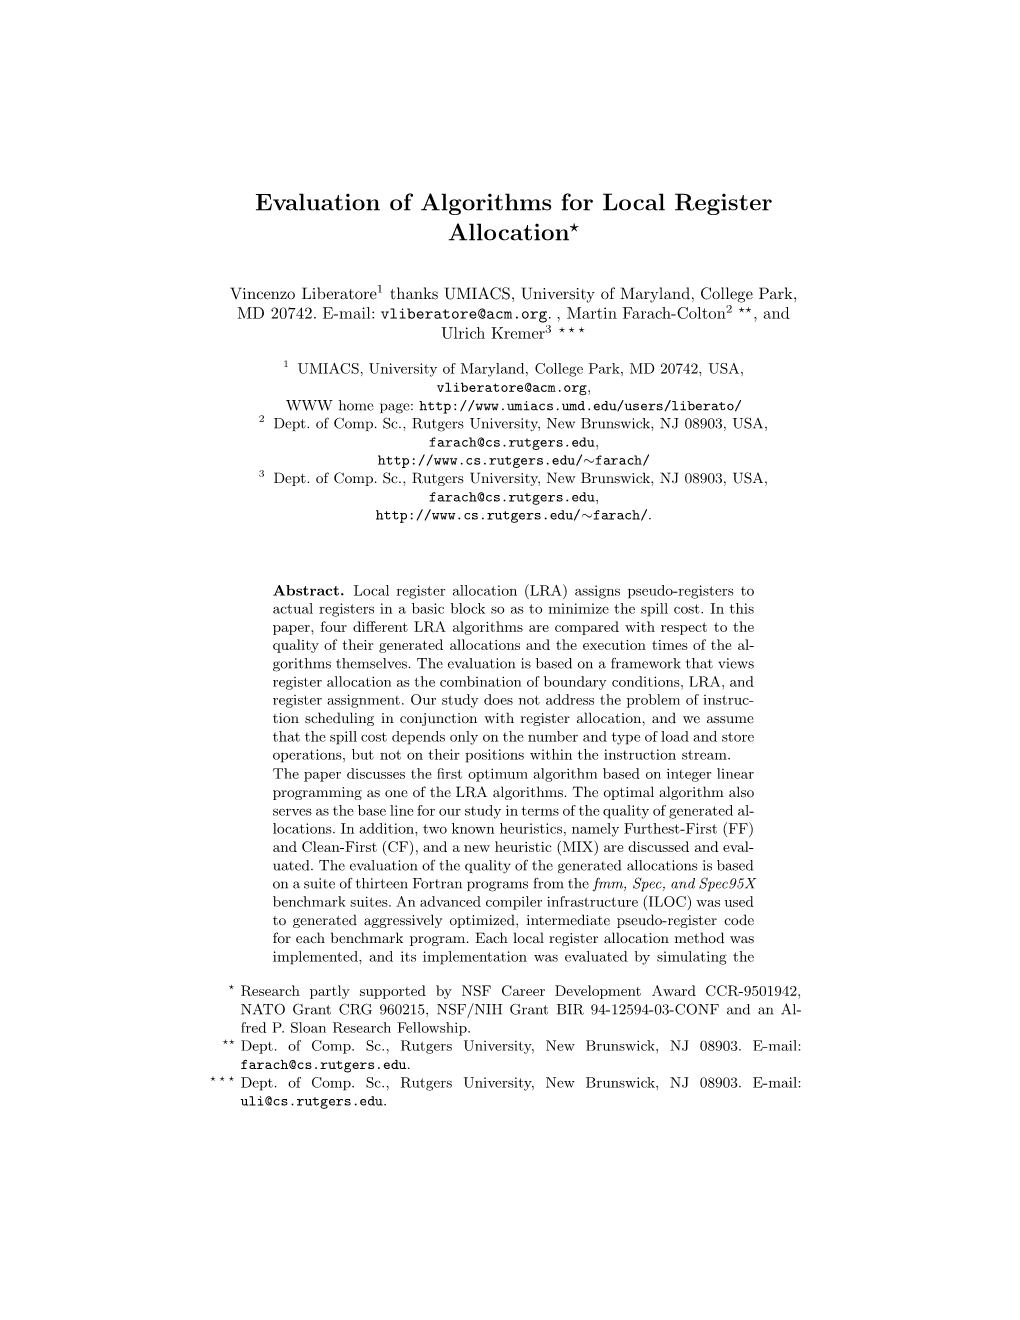 Evaluation of Algorithms for Local Register Allocation*